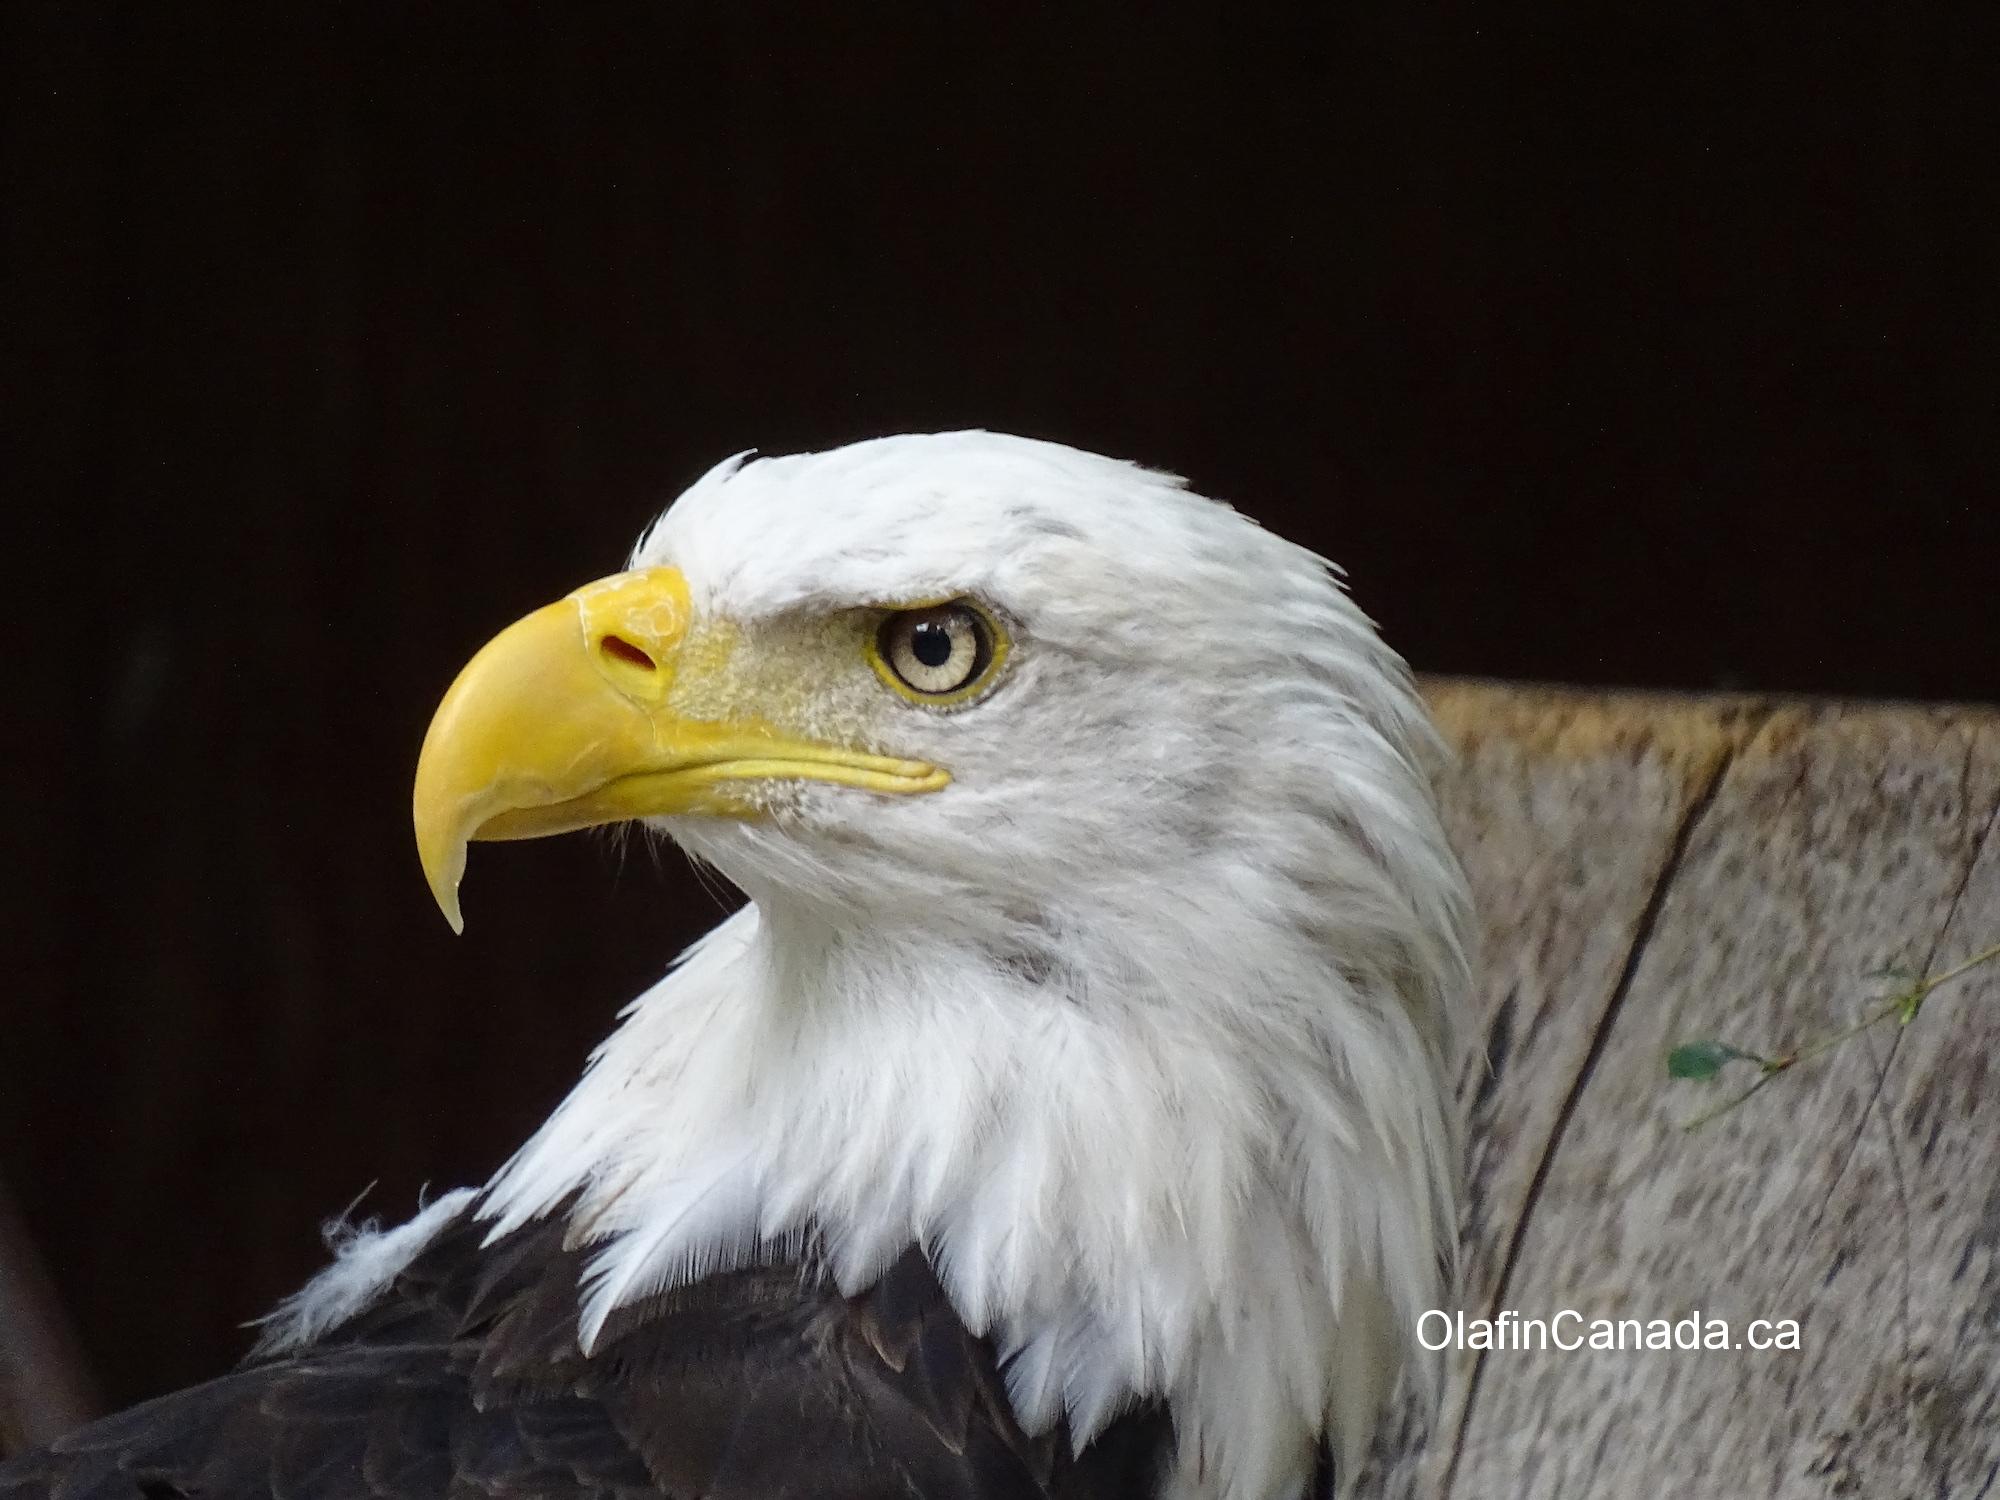 Bald eagle close up on Vancouver Island #olafincanada #britishcolumbia #discoverbc #wildlife #baldeagle